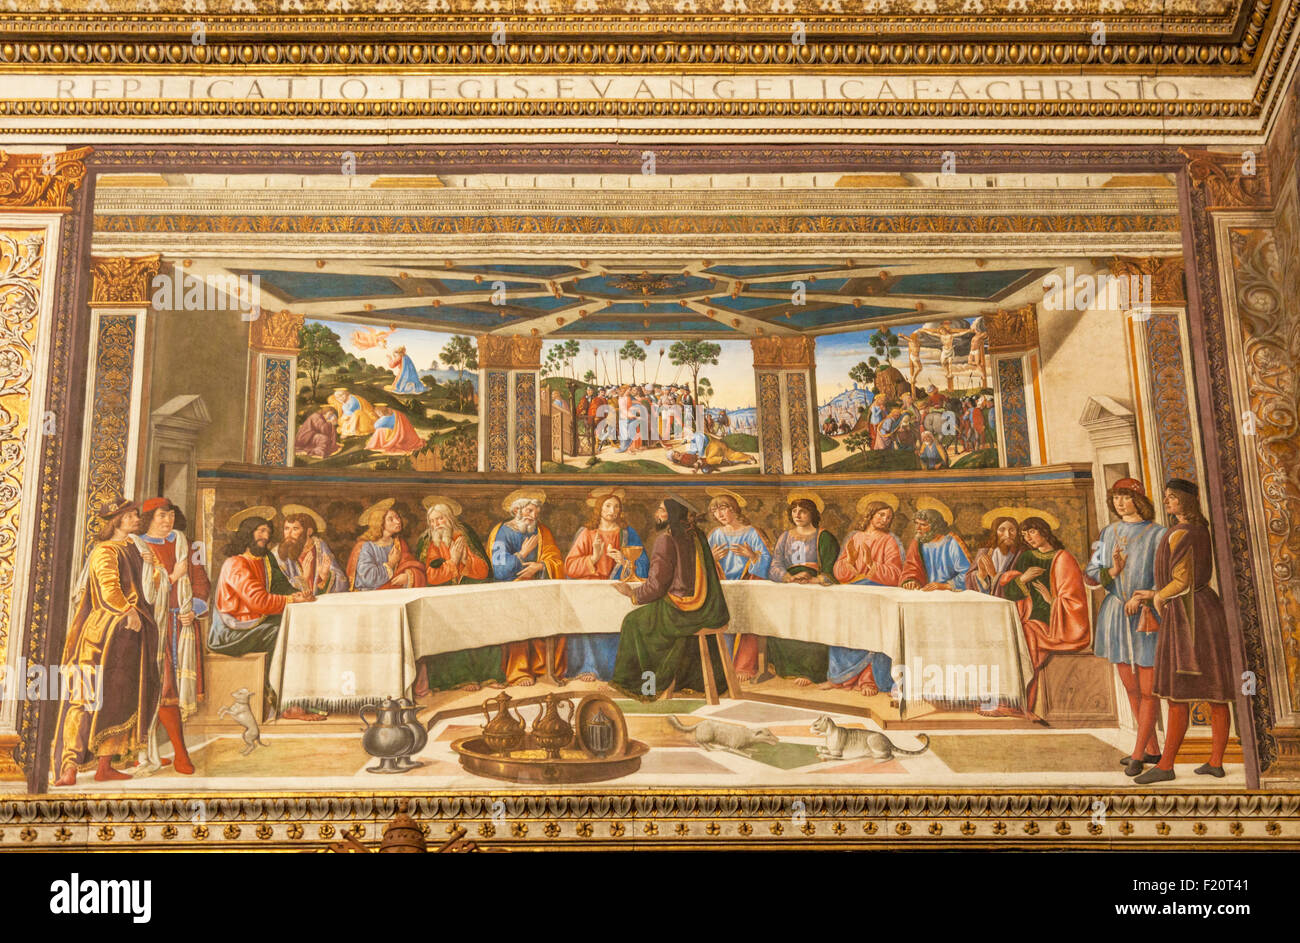 Das letzte Abendmahl ein Fresko von Cosimo Rosselli Sixtinische Kapelle Apostolischen Palast Vatikan Museum Vatikanstadt Rom Italien EU Europa Stockfoto